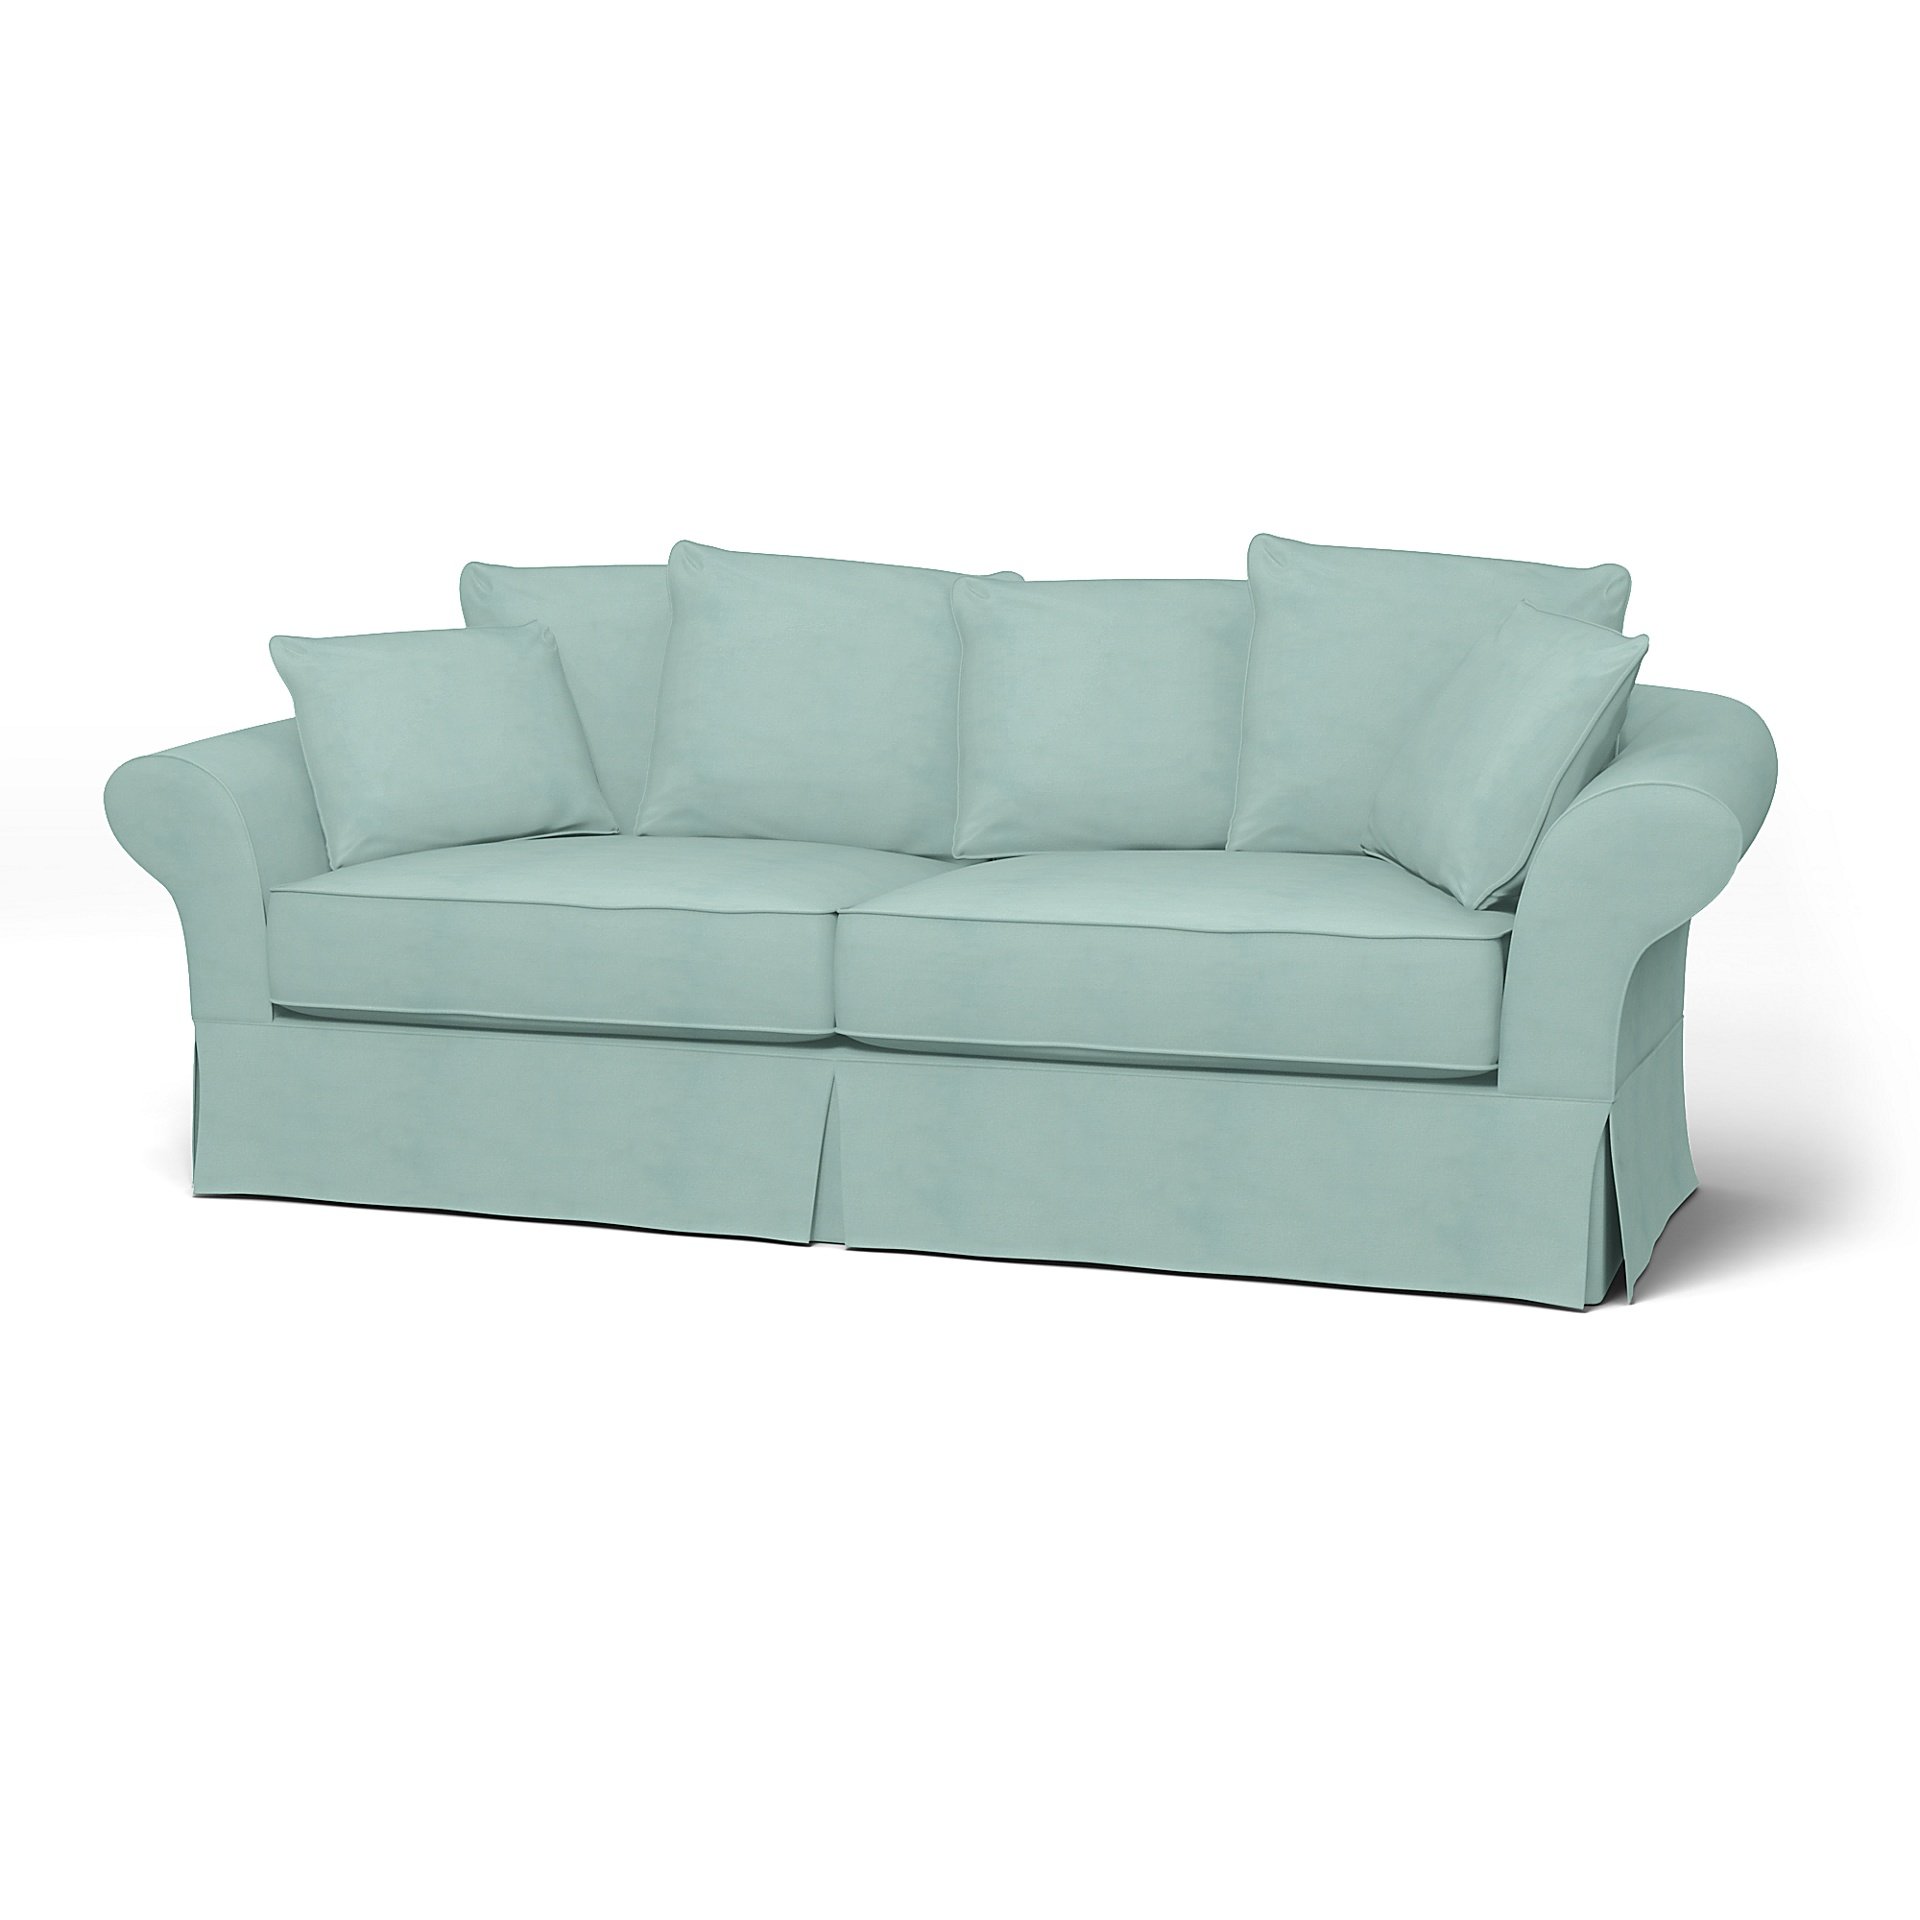 IKEA - Backamo 3 Seater Sofa Cover, Mineral Blue, Linen - Bemz